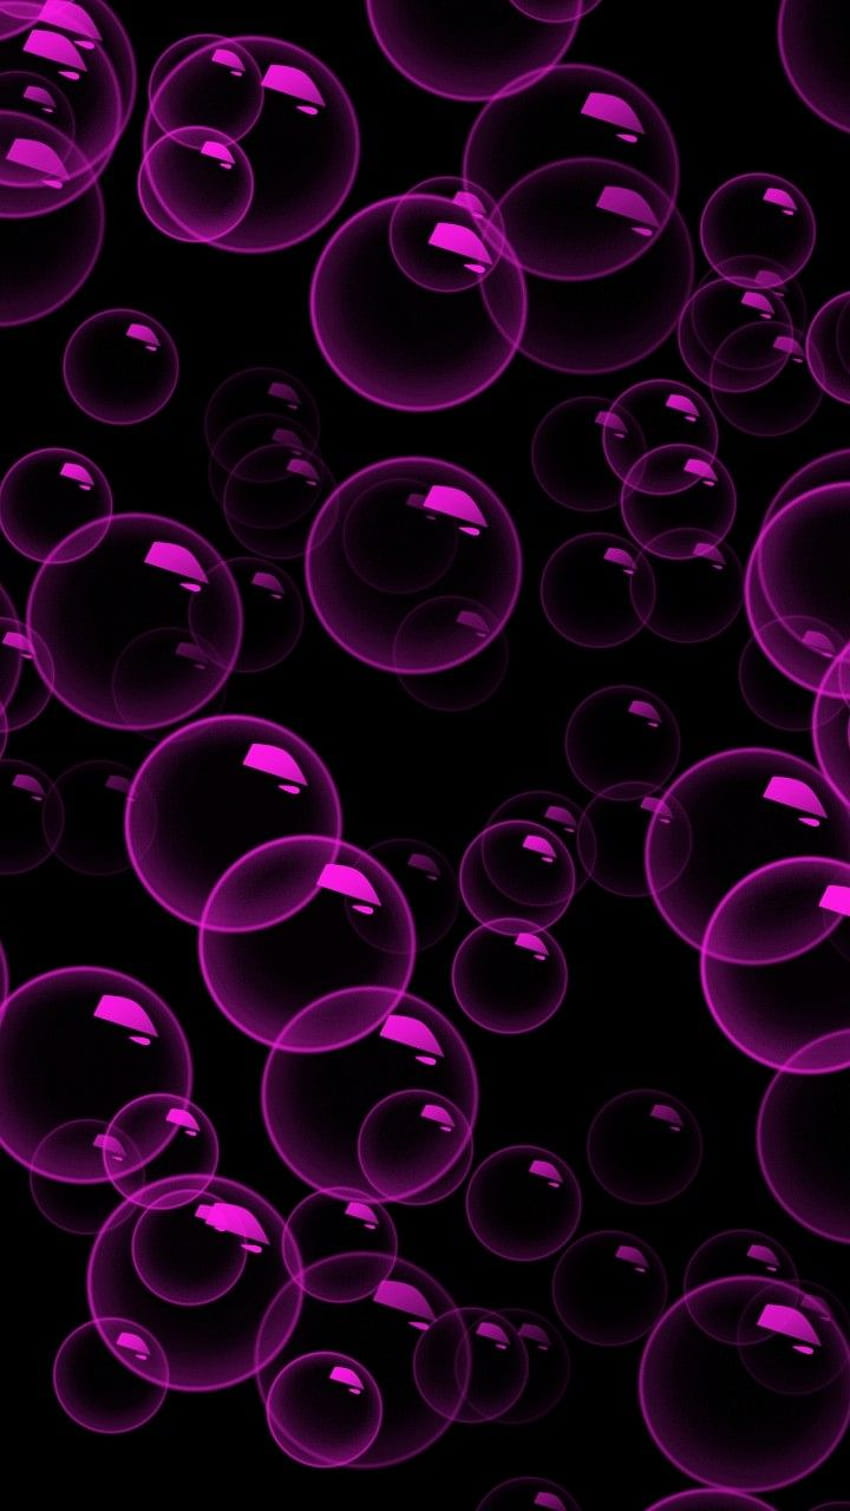 84 ideas de burbujas de colores, burbujas moradas fondo de pantalla del teléfono